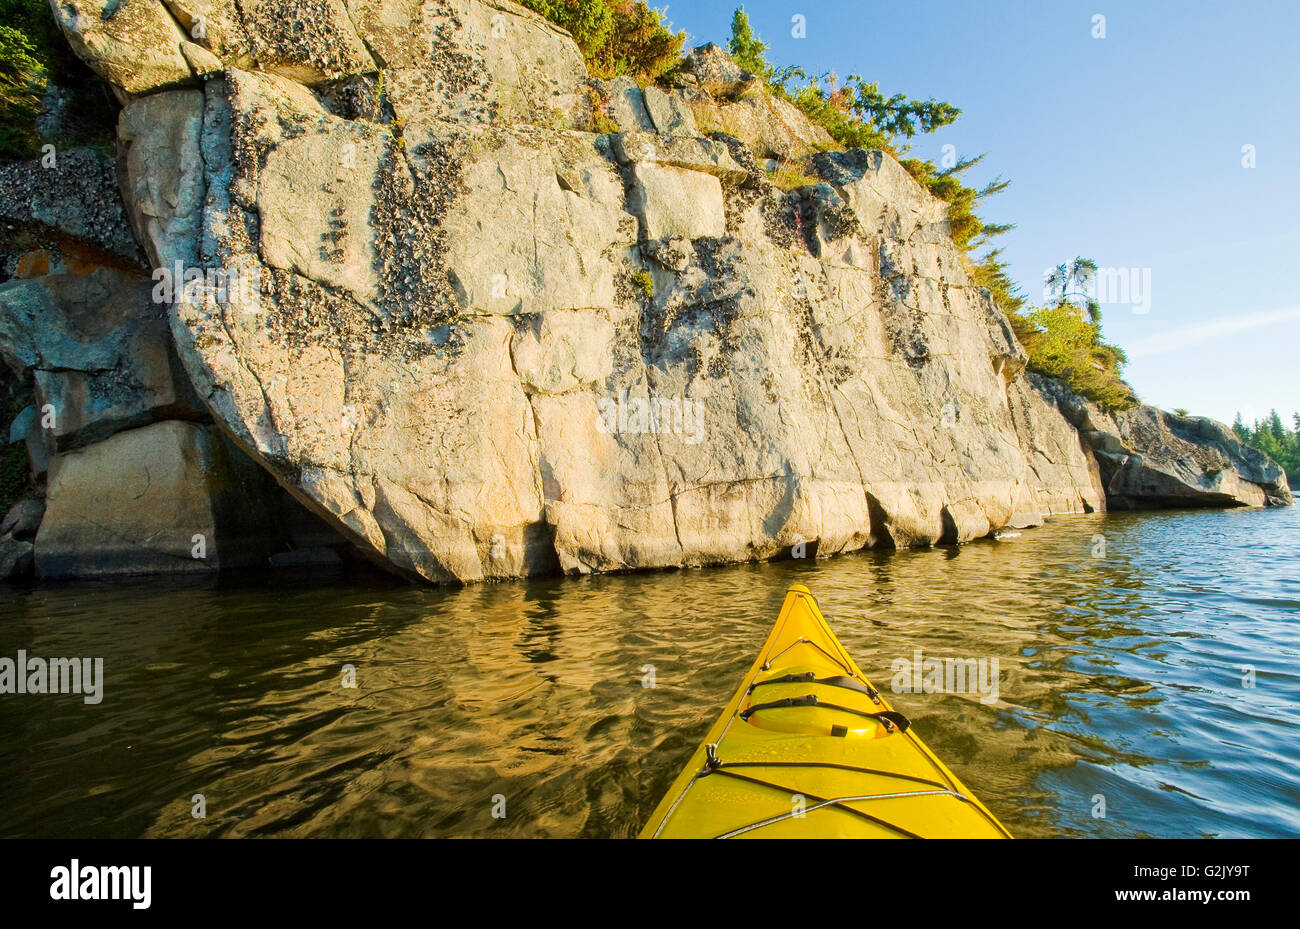 kayak on Lake of the Woods, Northwestern Ontario, Canada Stock Photo